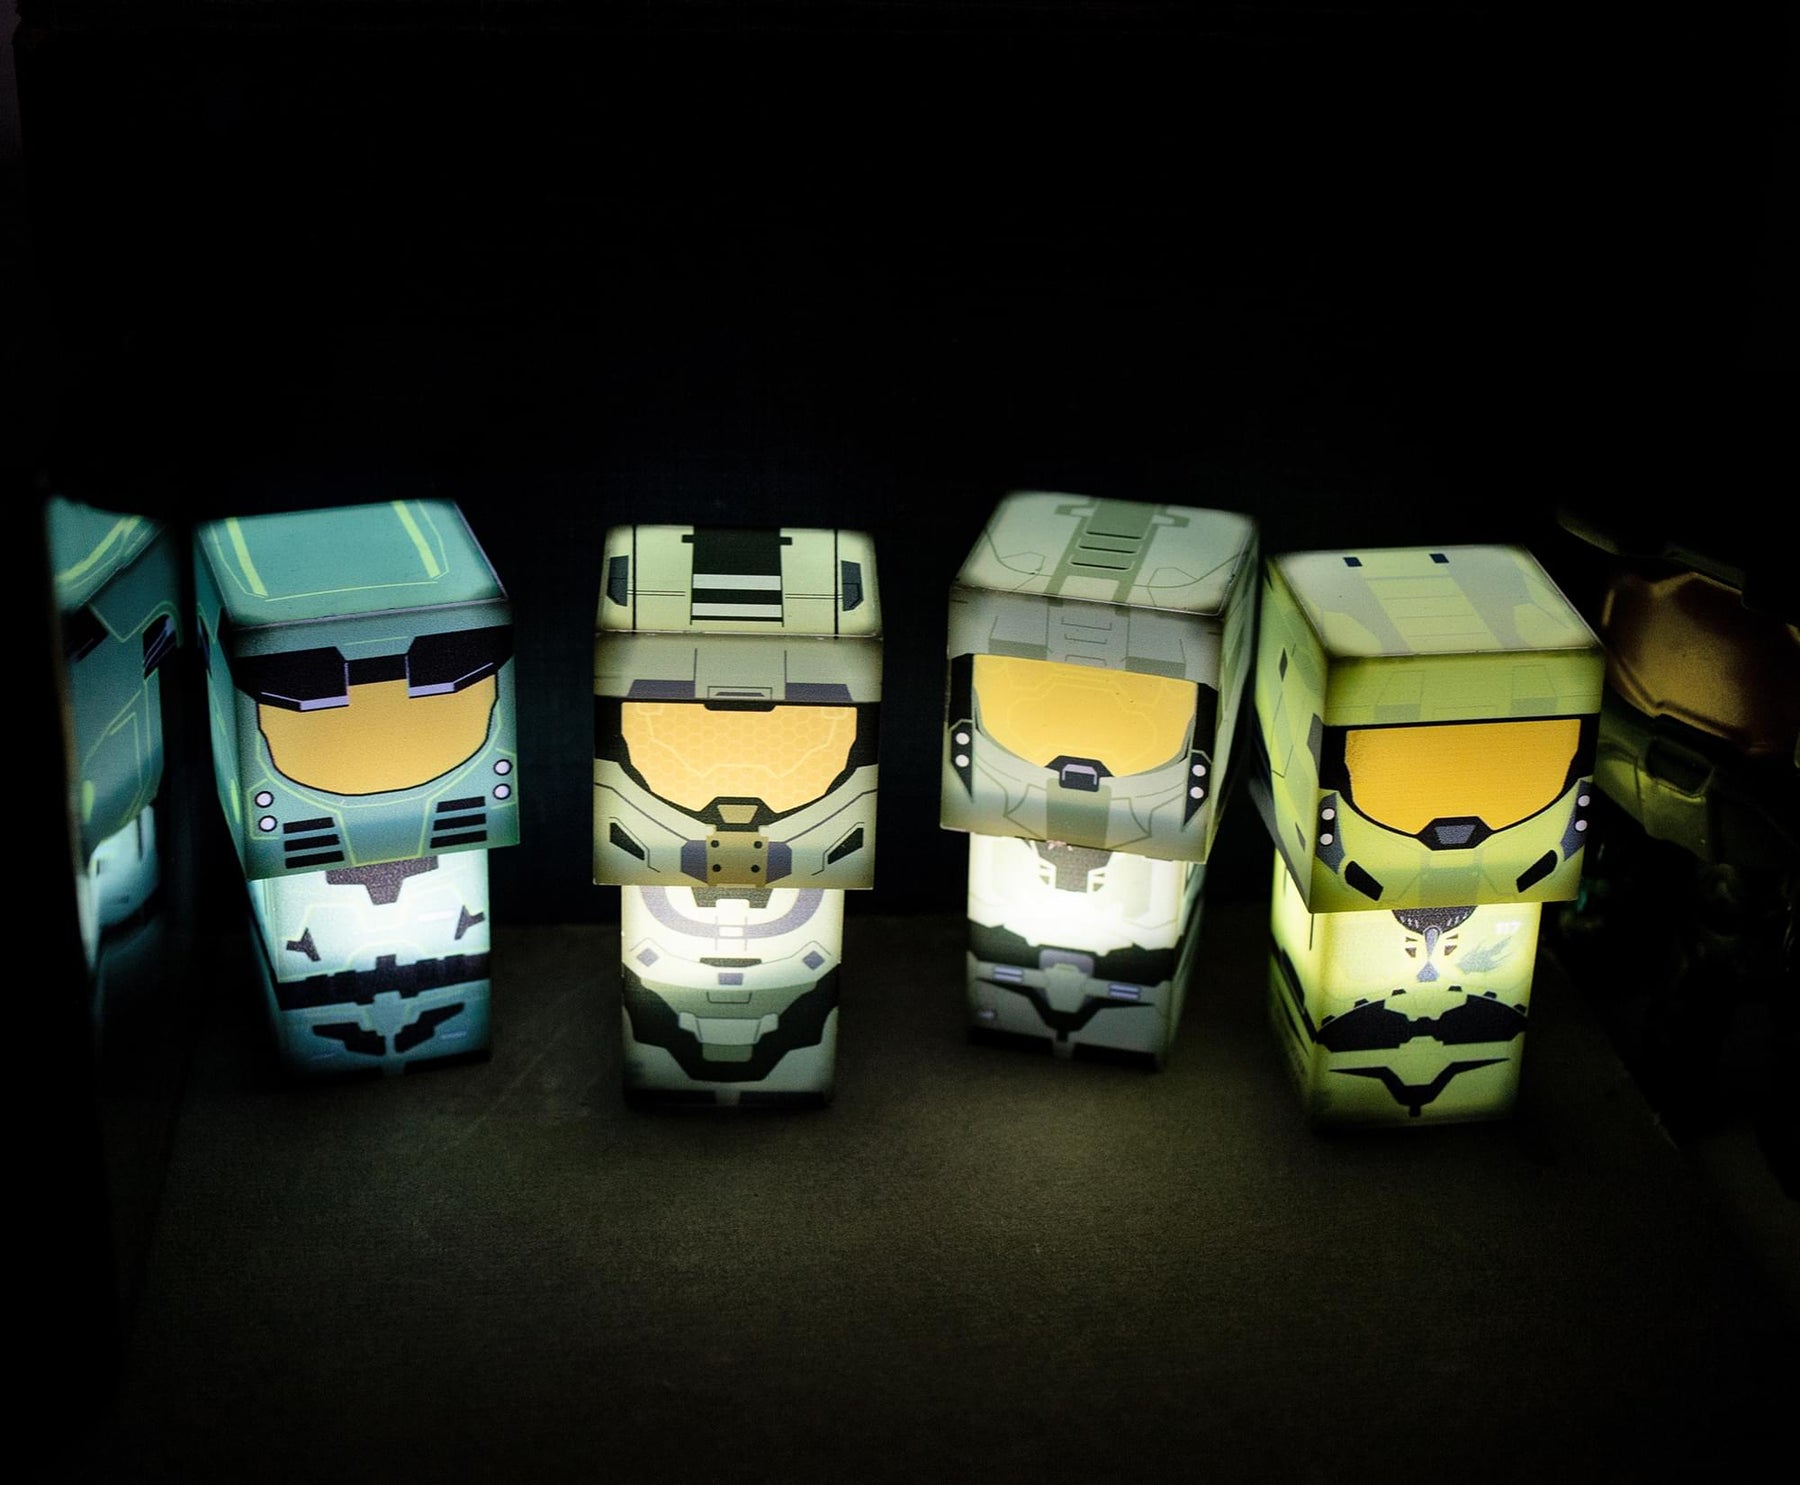 HALO Green Master Chief Evolved Mini Figural Mood Lights | Set of 4